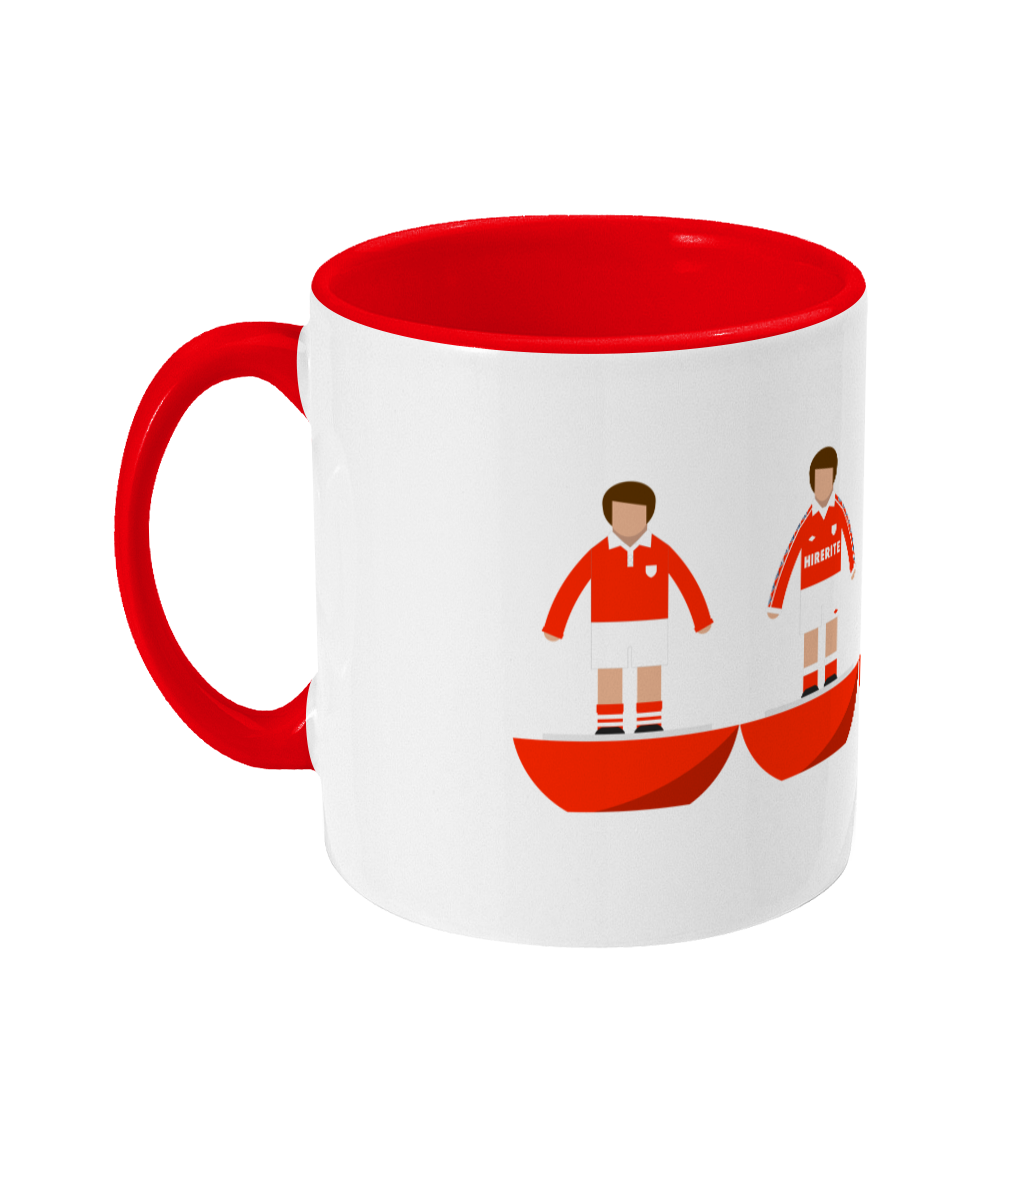 Football Kits 'Bristol City combined' Mug